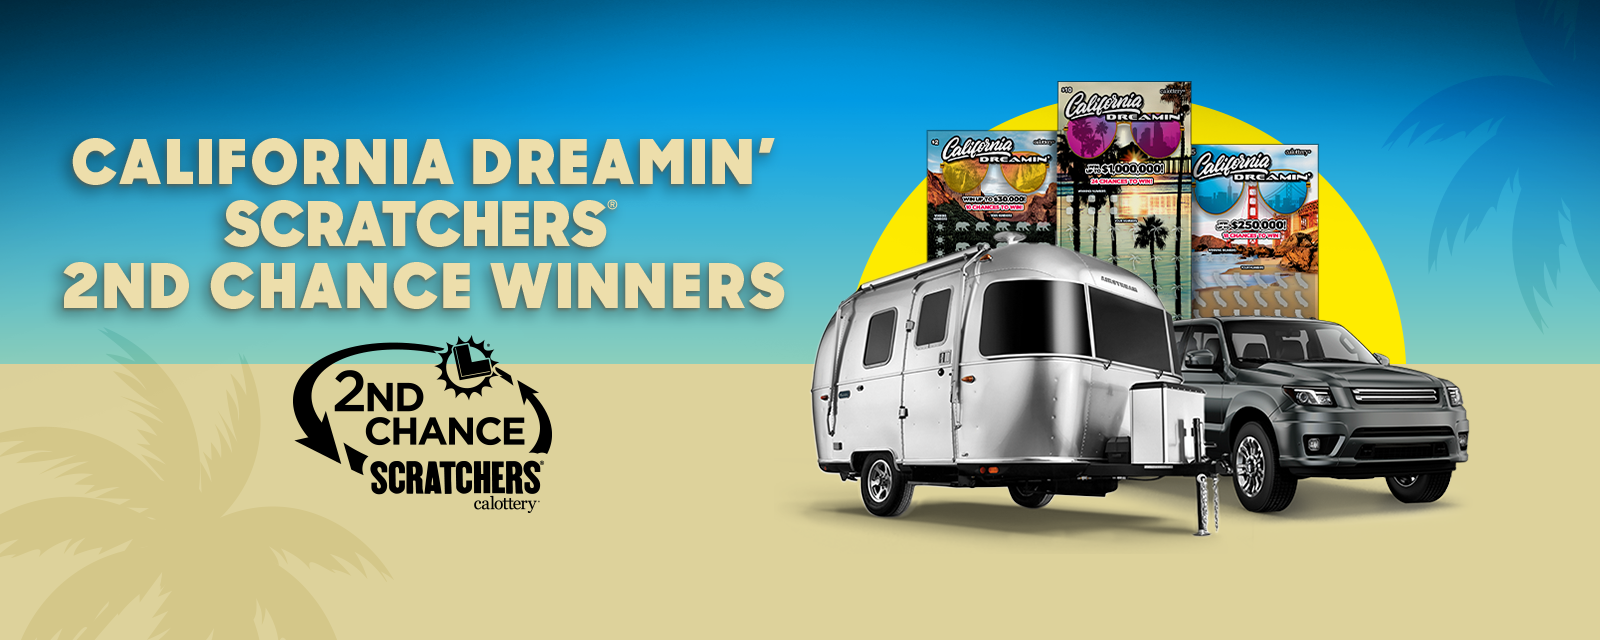 California Dreamin' Scratcher 2nd Chance Bonus Draw Winners